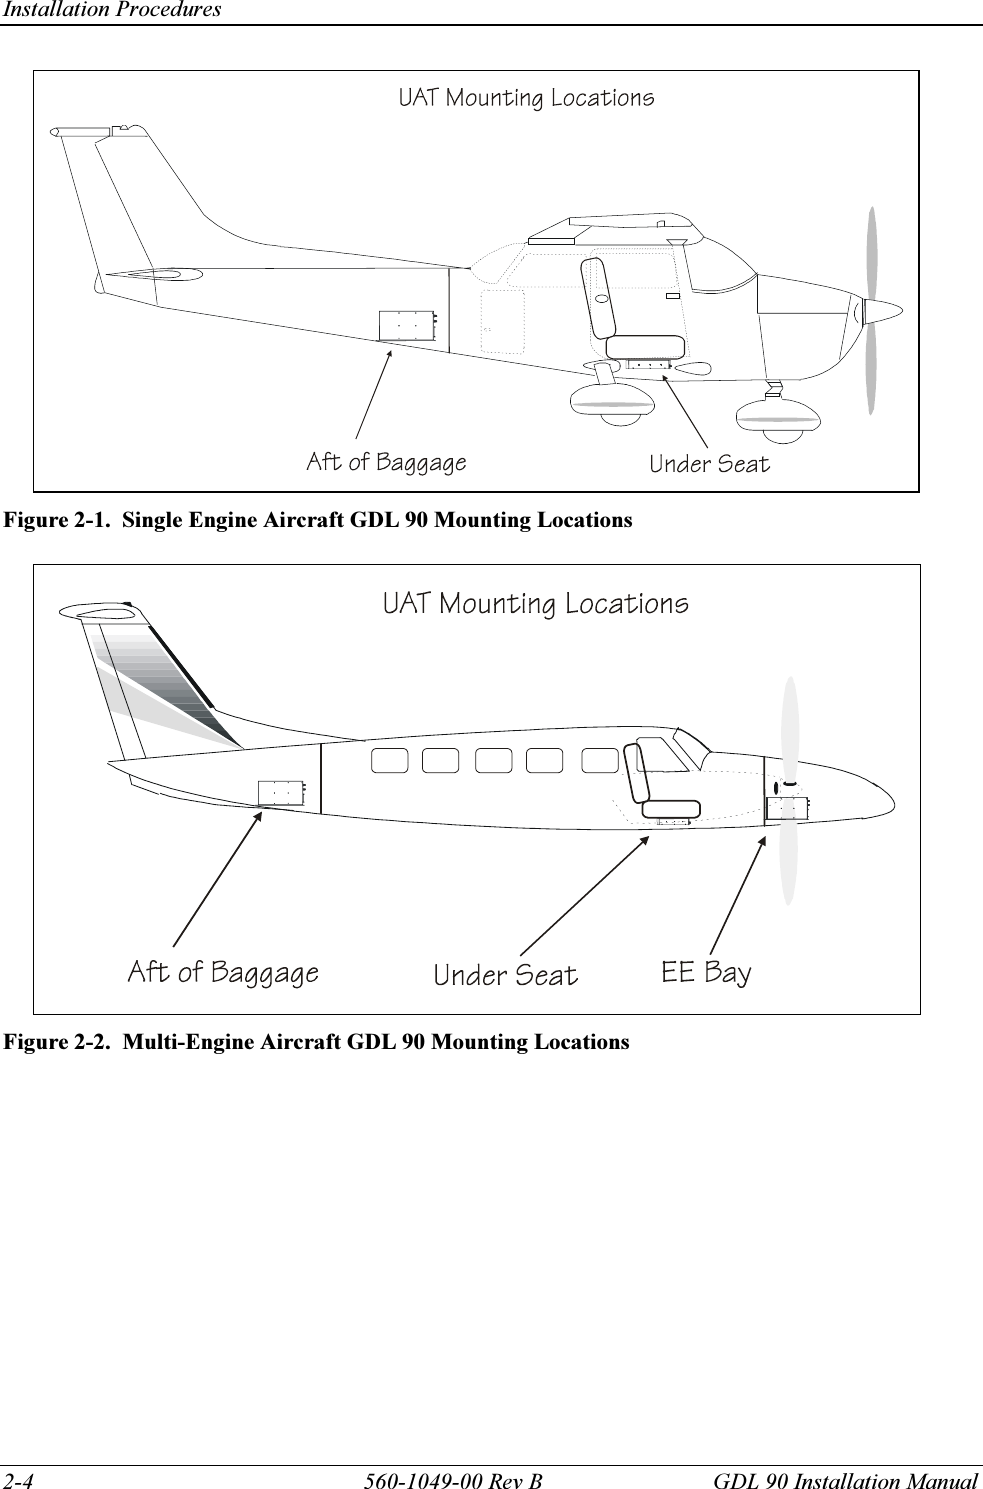 Installation Procedures 2-4  560-1049-00 Rev B  GDL 90 Installation Manual  Figure 2-1.  Single Engine Aircraft GDL 90 Mounting Locations   Figure 2-2.  Multi-Engine Aircraft GDL 90 Mounting Locations  